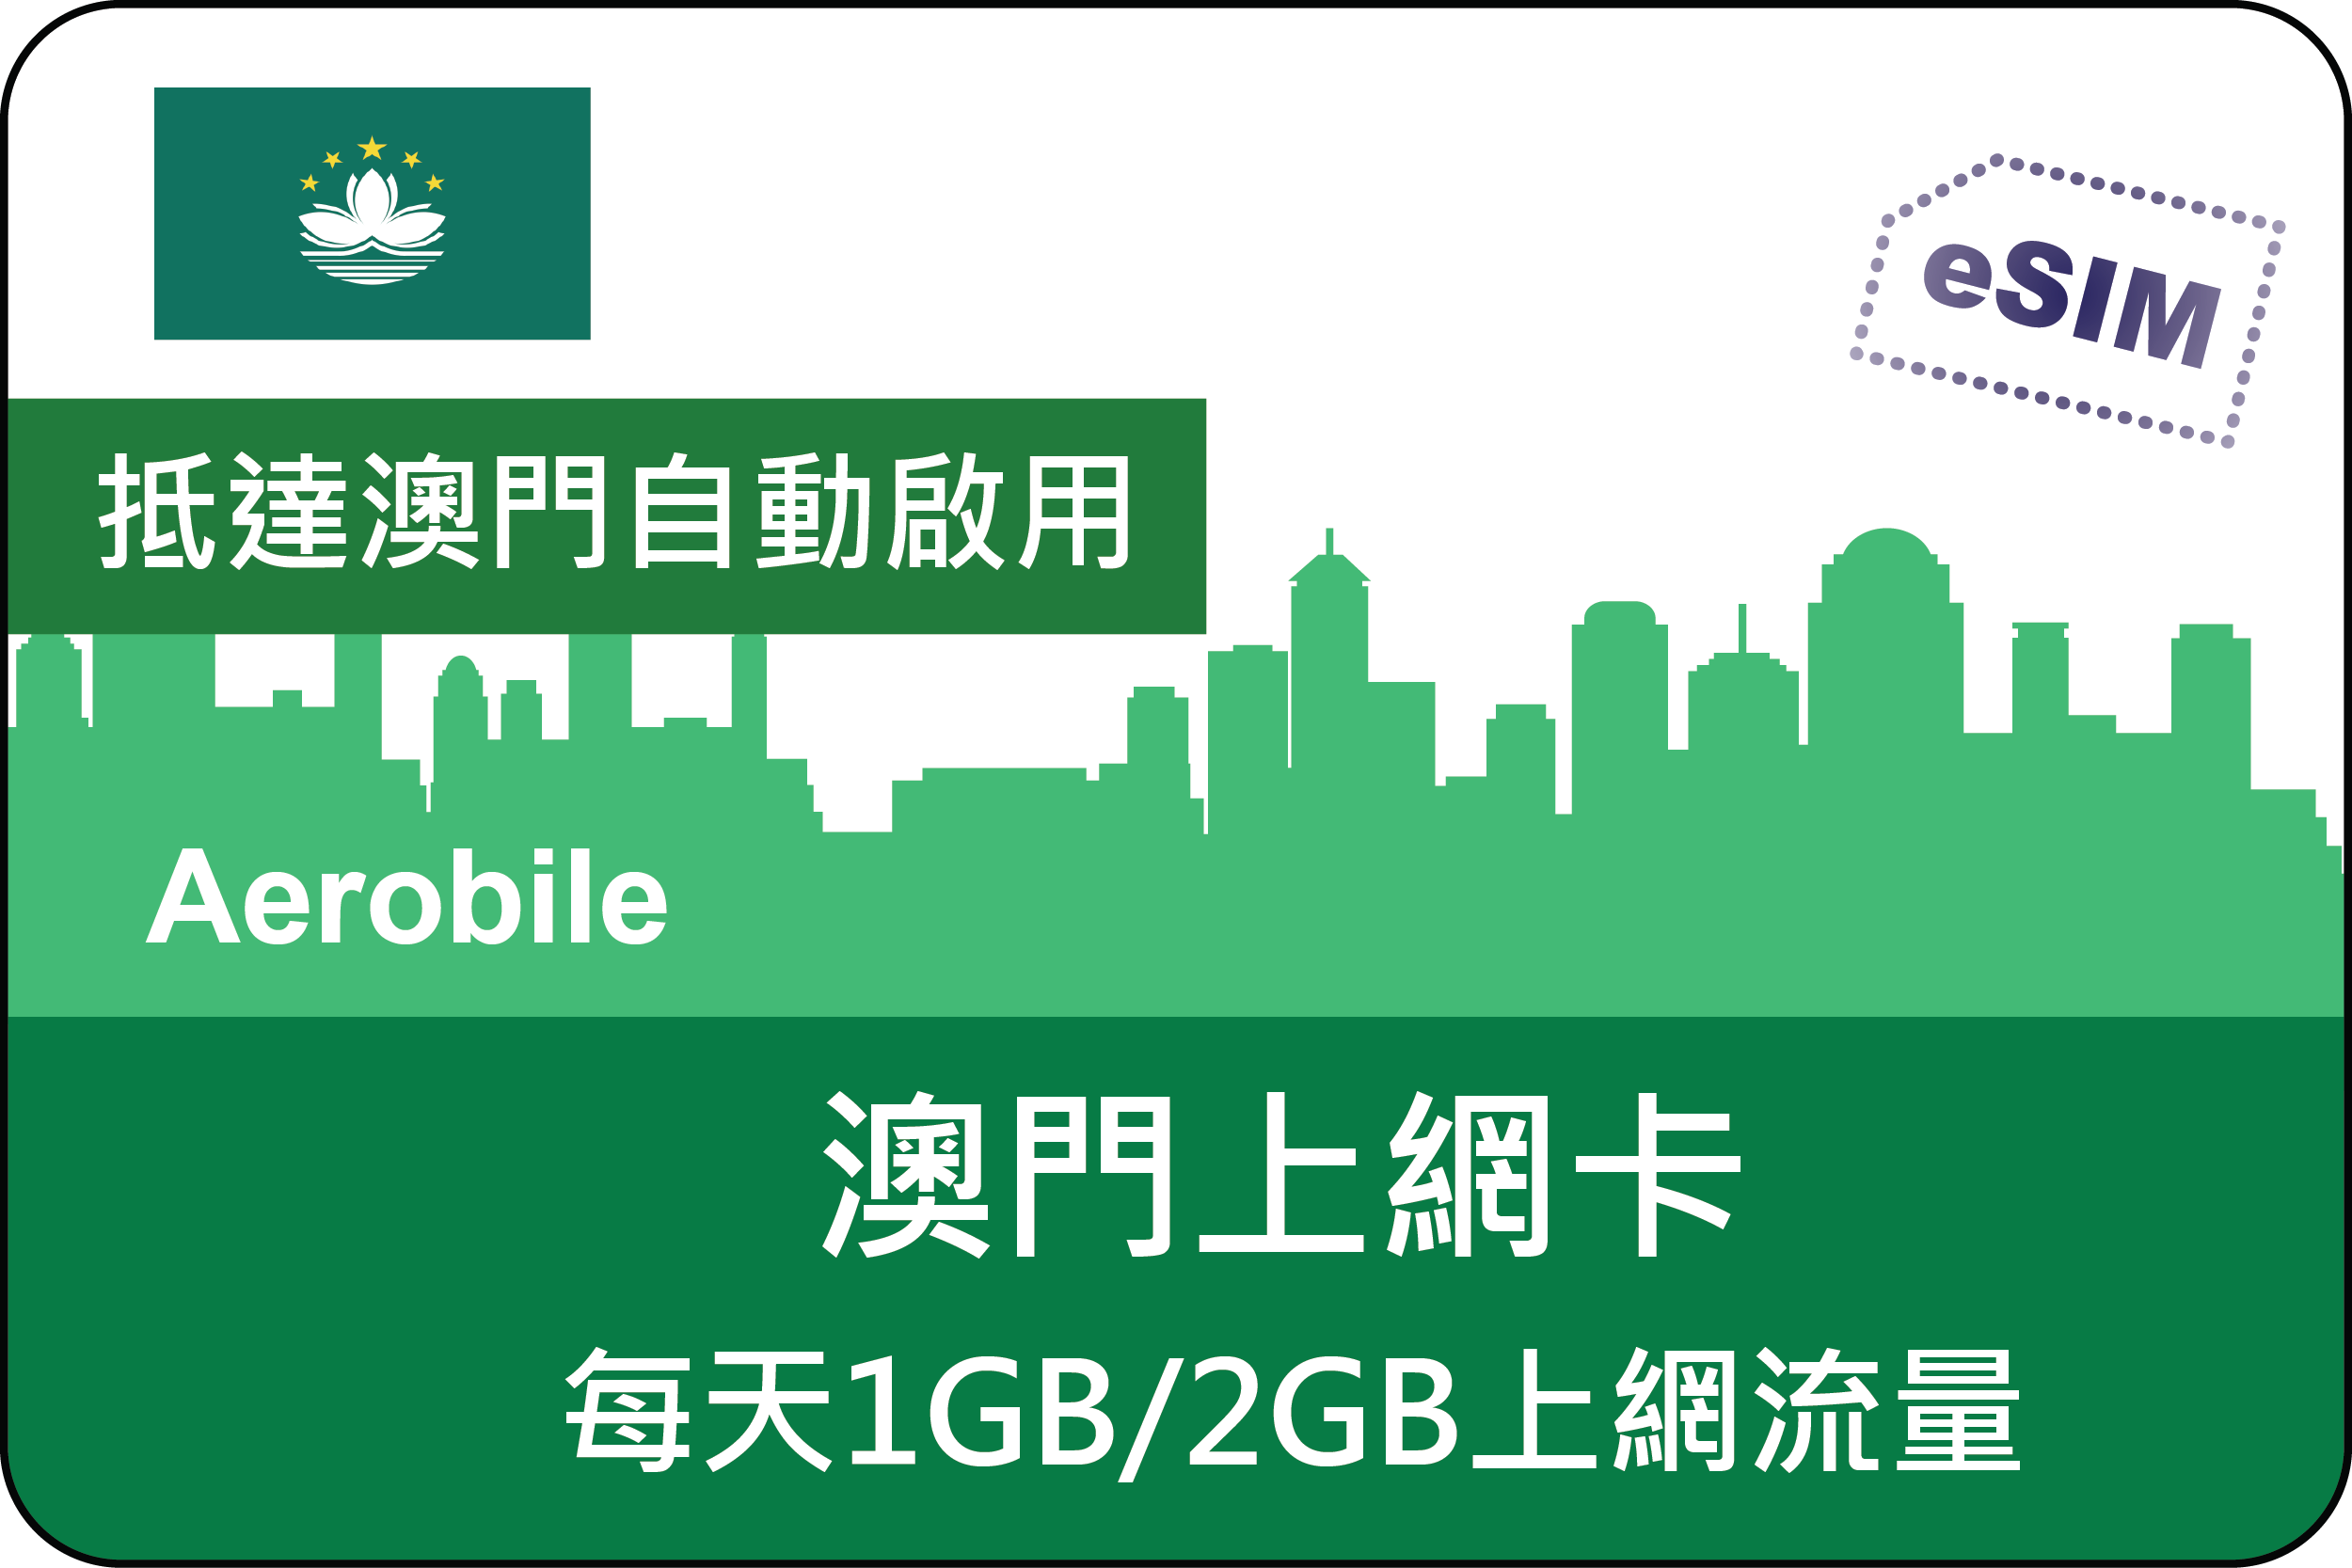 esim澳門上網卡每天1GB 或 2GB自動翻牆可用FB、LINE (i)不含香港